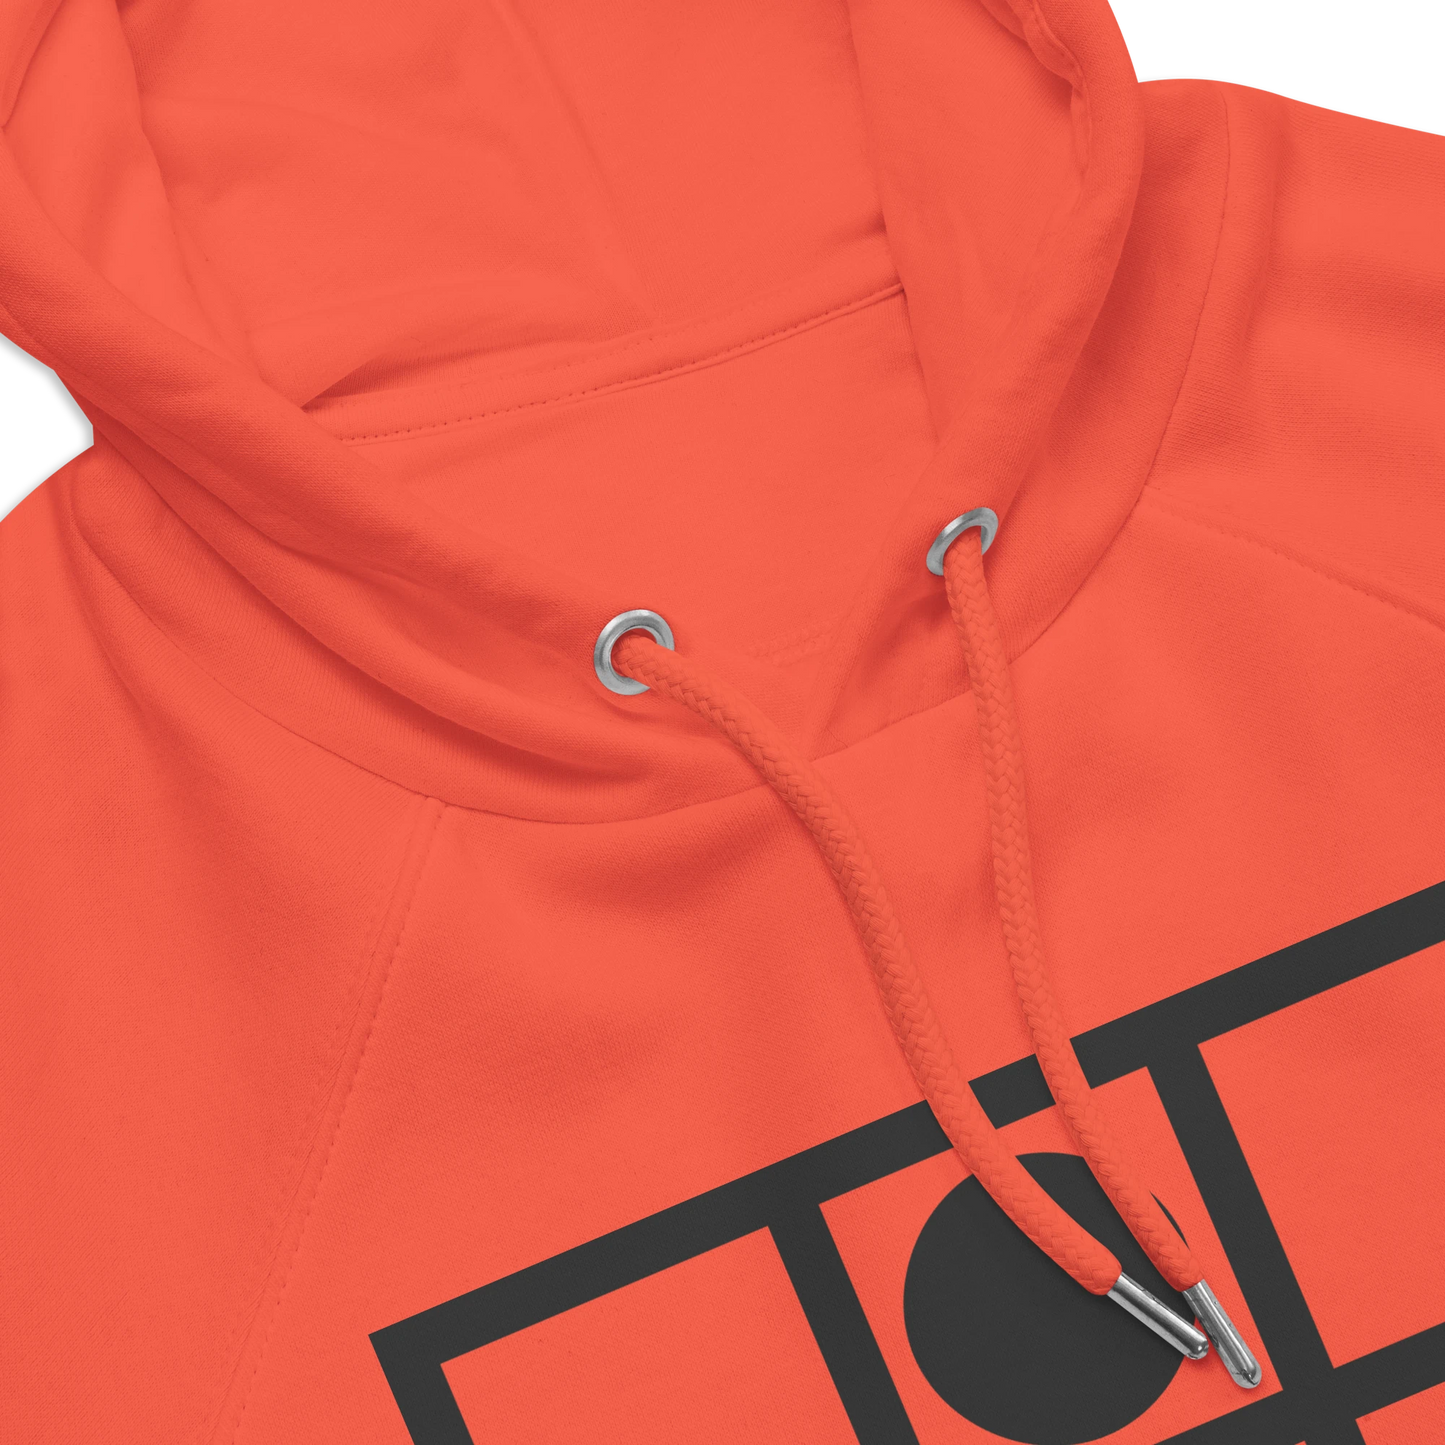 Hacker subculture emblem premium hoodie product details product details product details